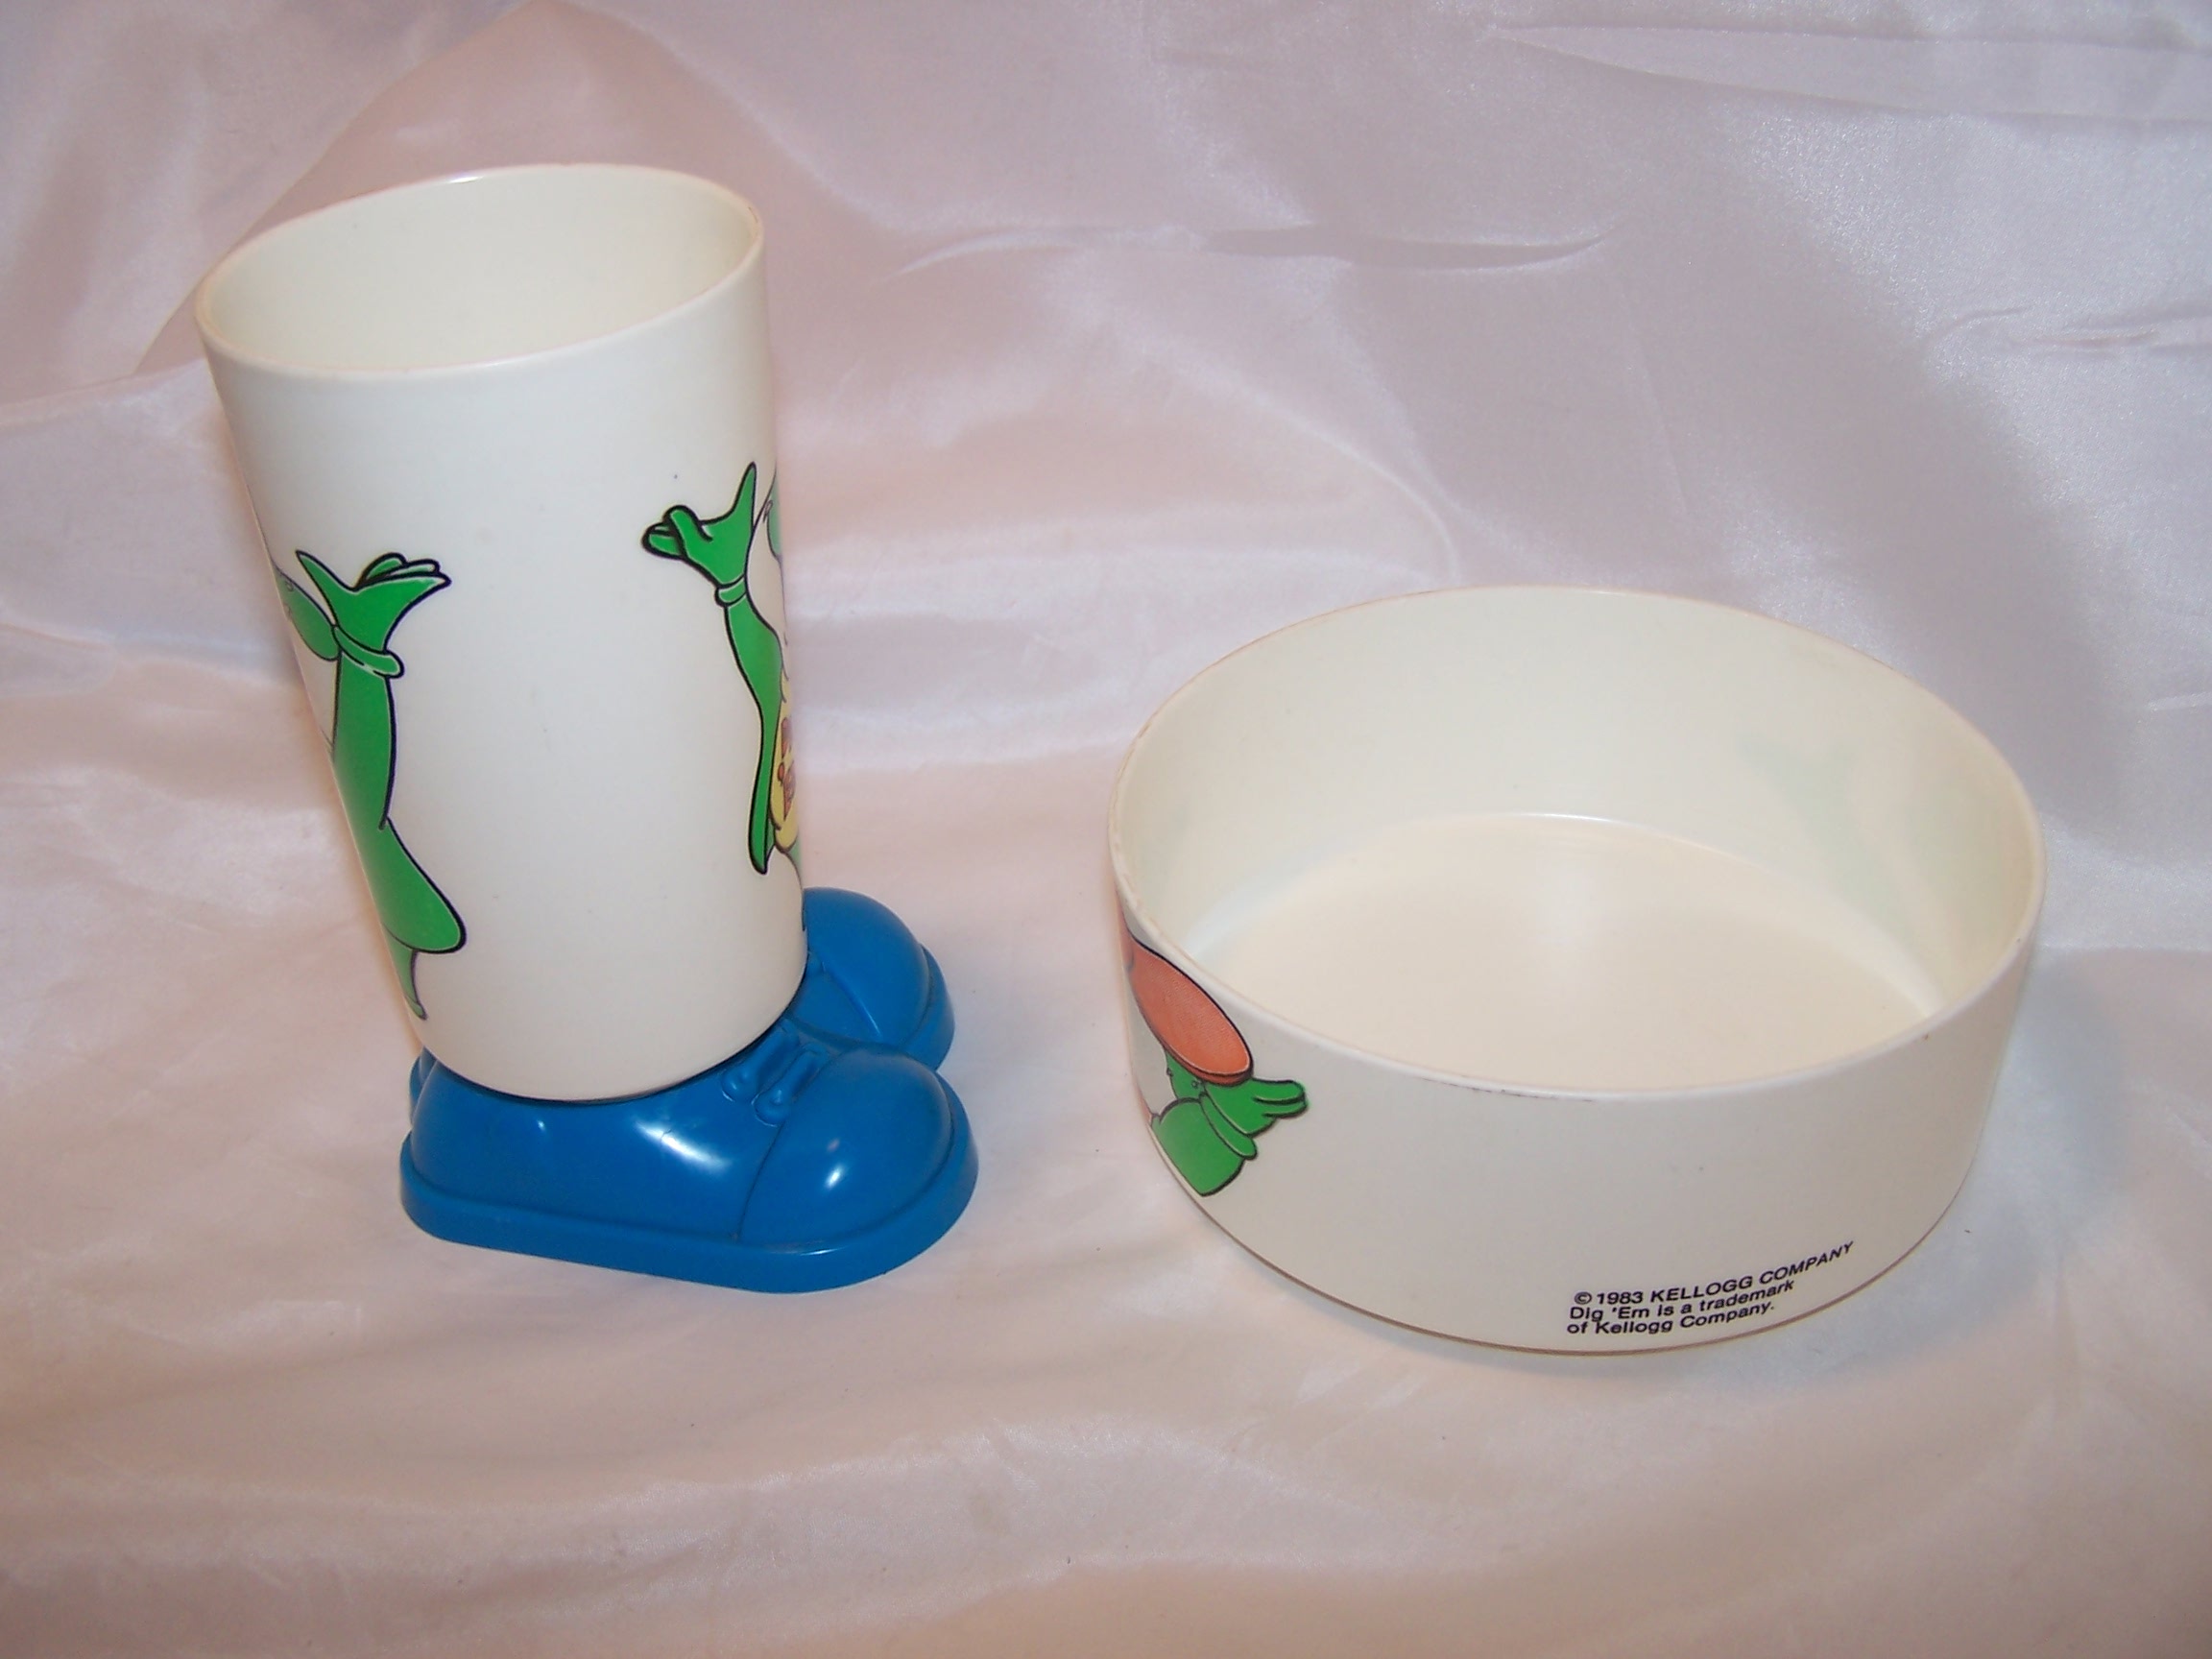 Image 4 of Kellogg Dig Em Cup and Bowl, Sugar Smacks, Plastic, 1980s